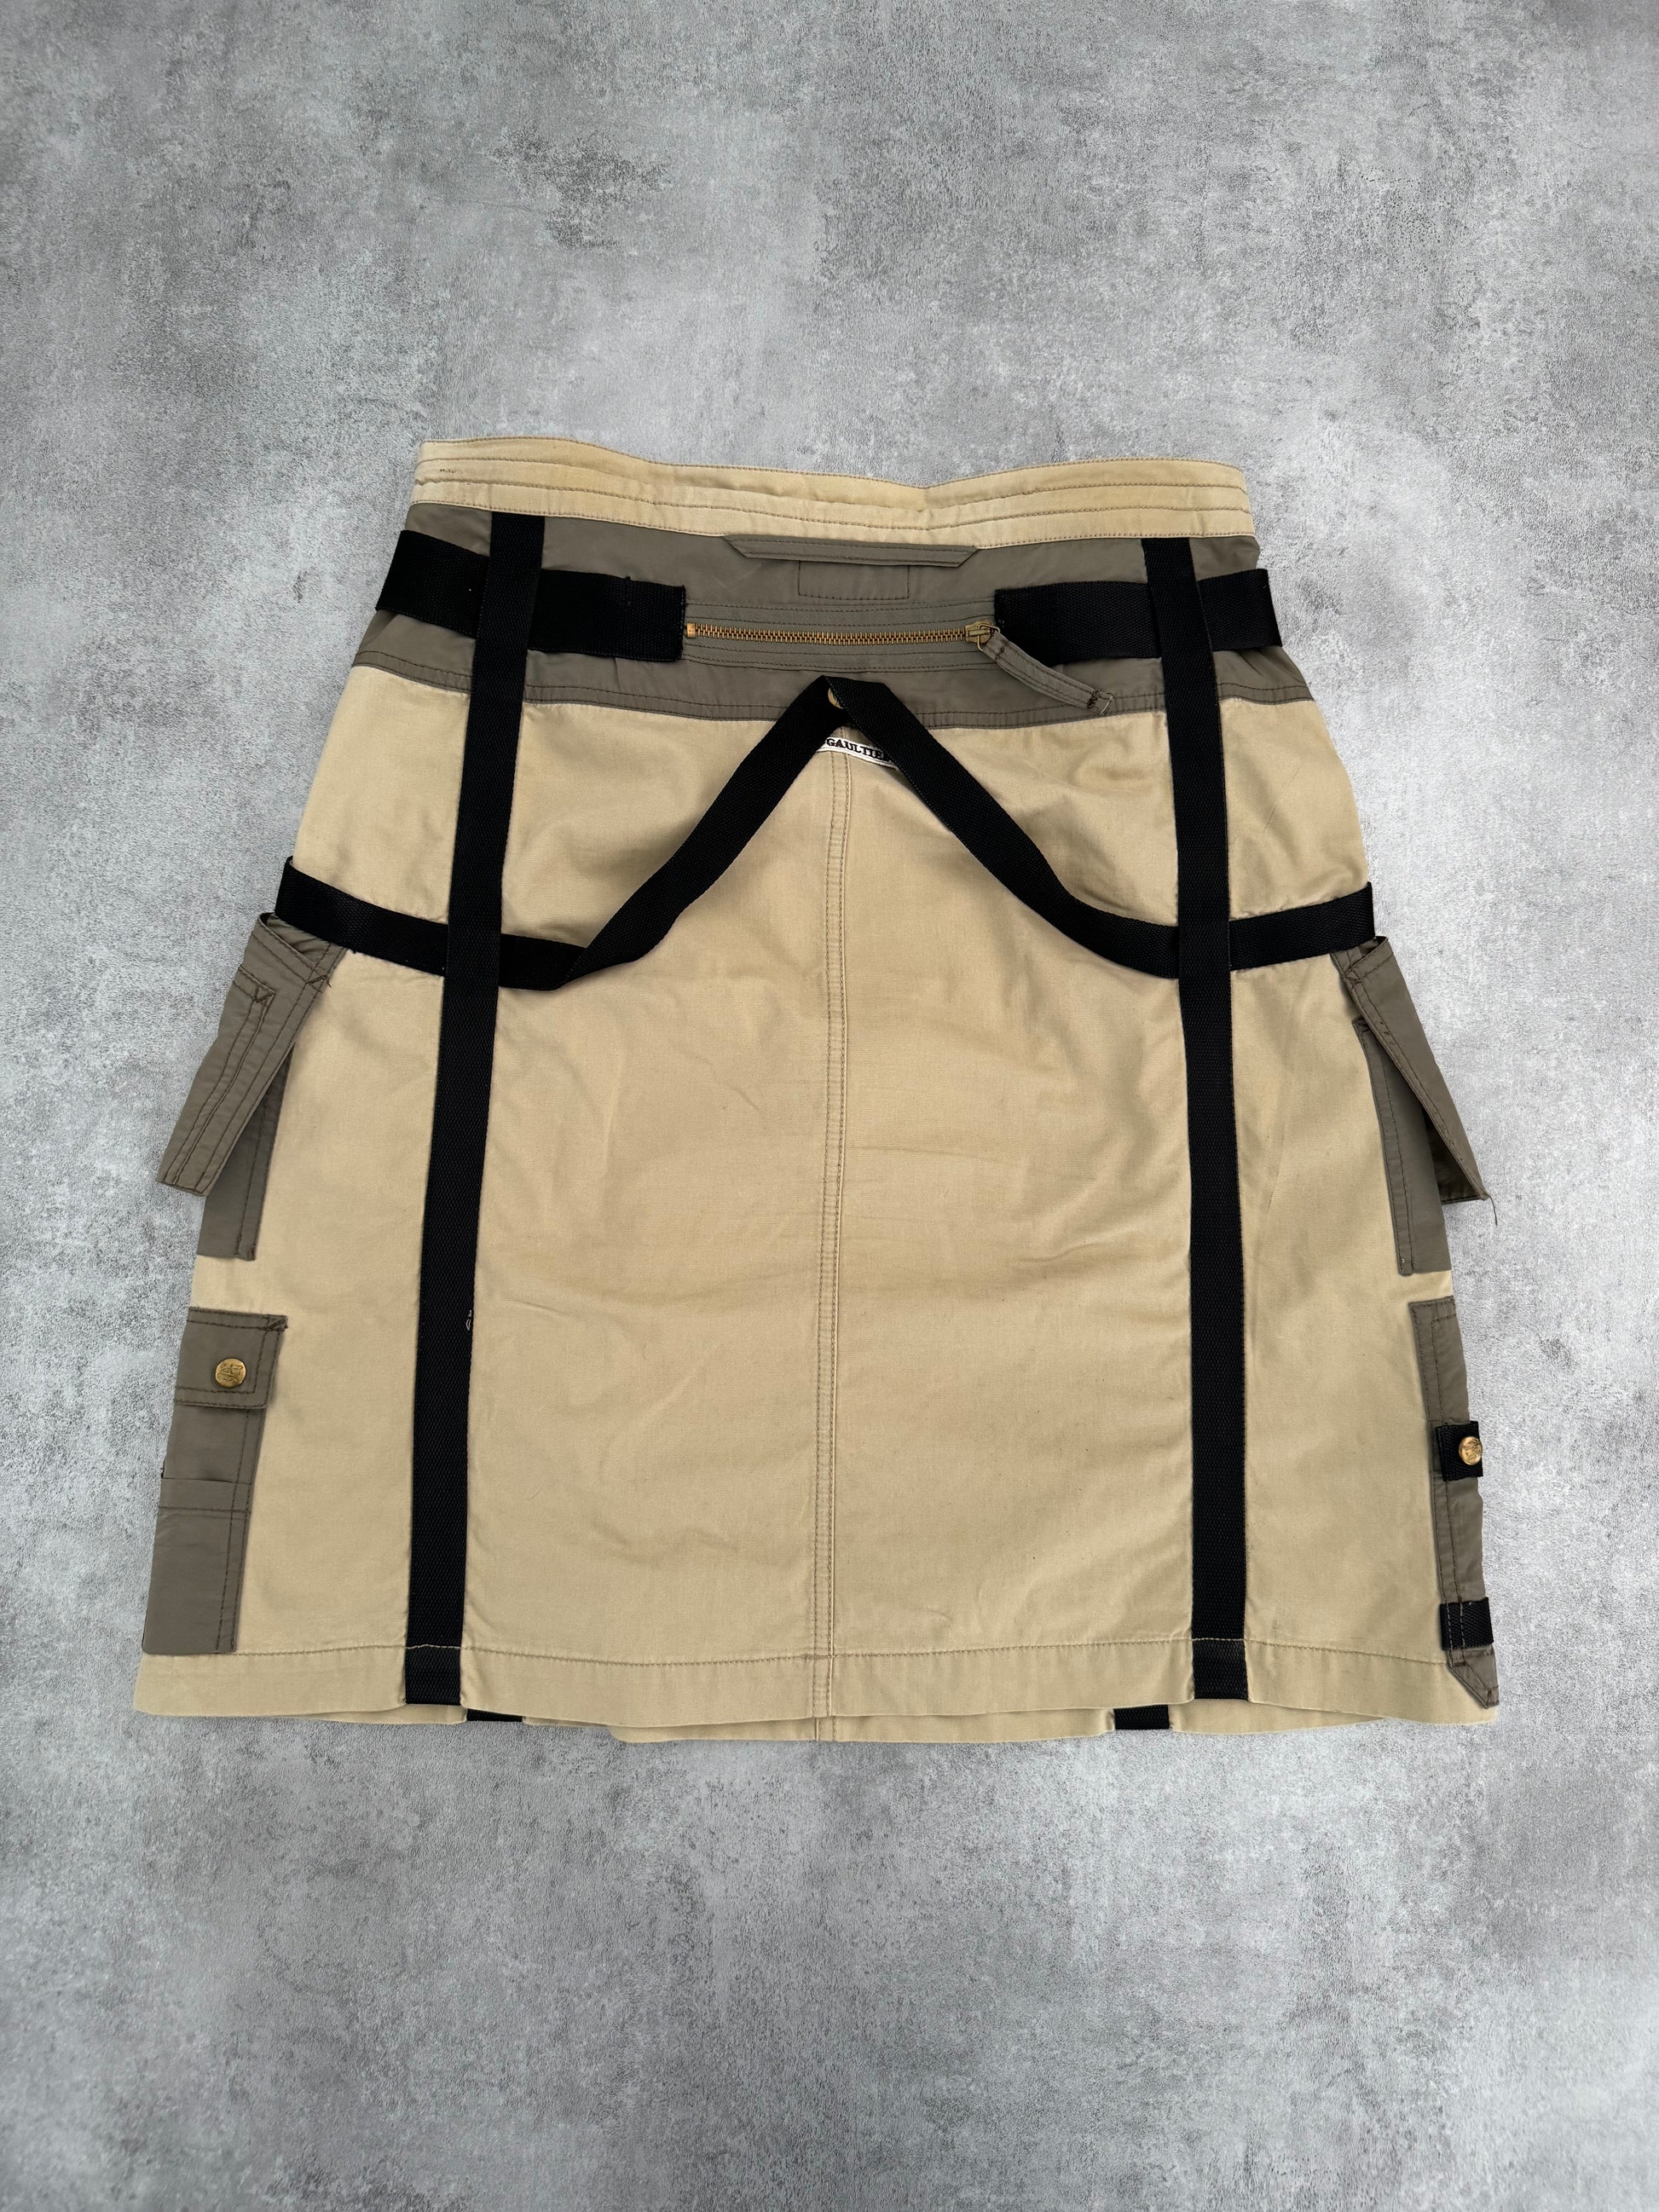 AW2003 Jean Paul Gaultier Bondage Skirt  (L) - 2